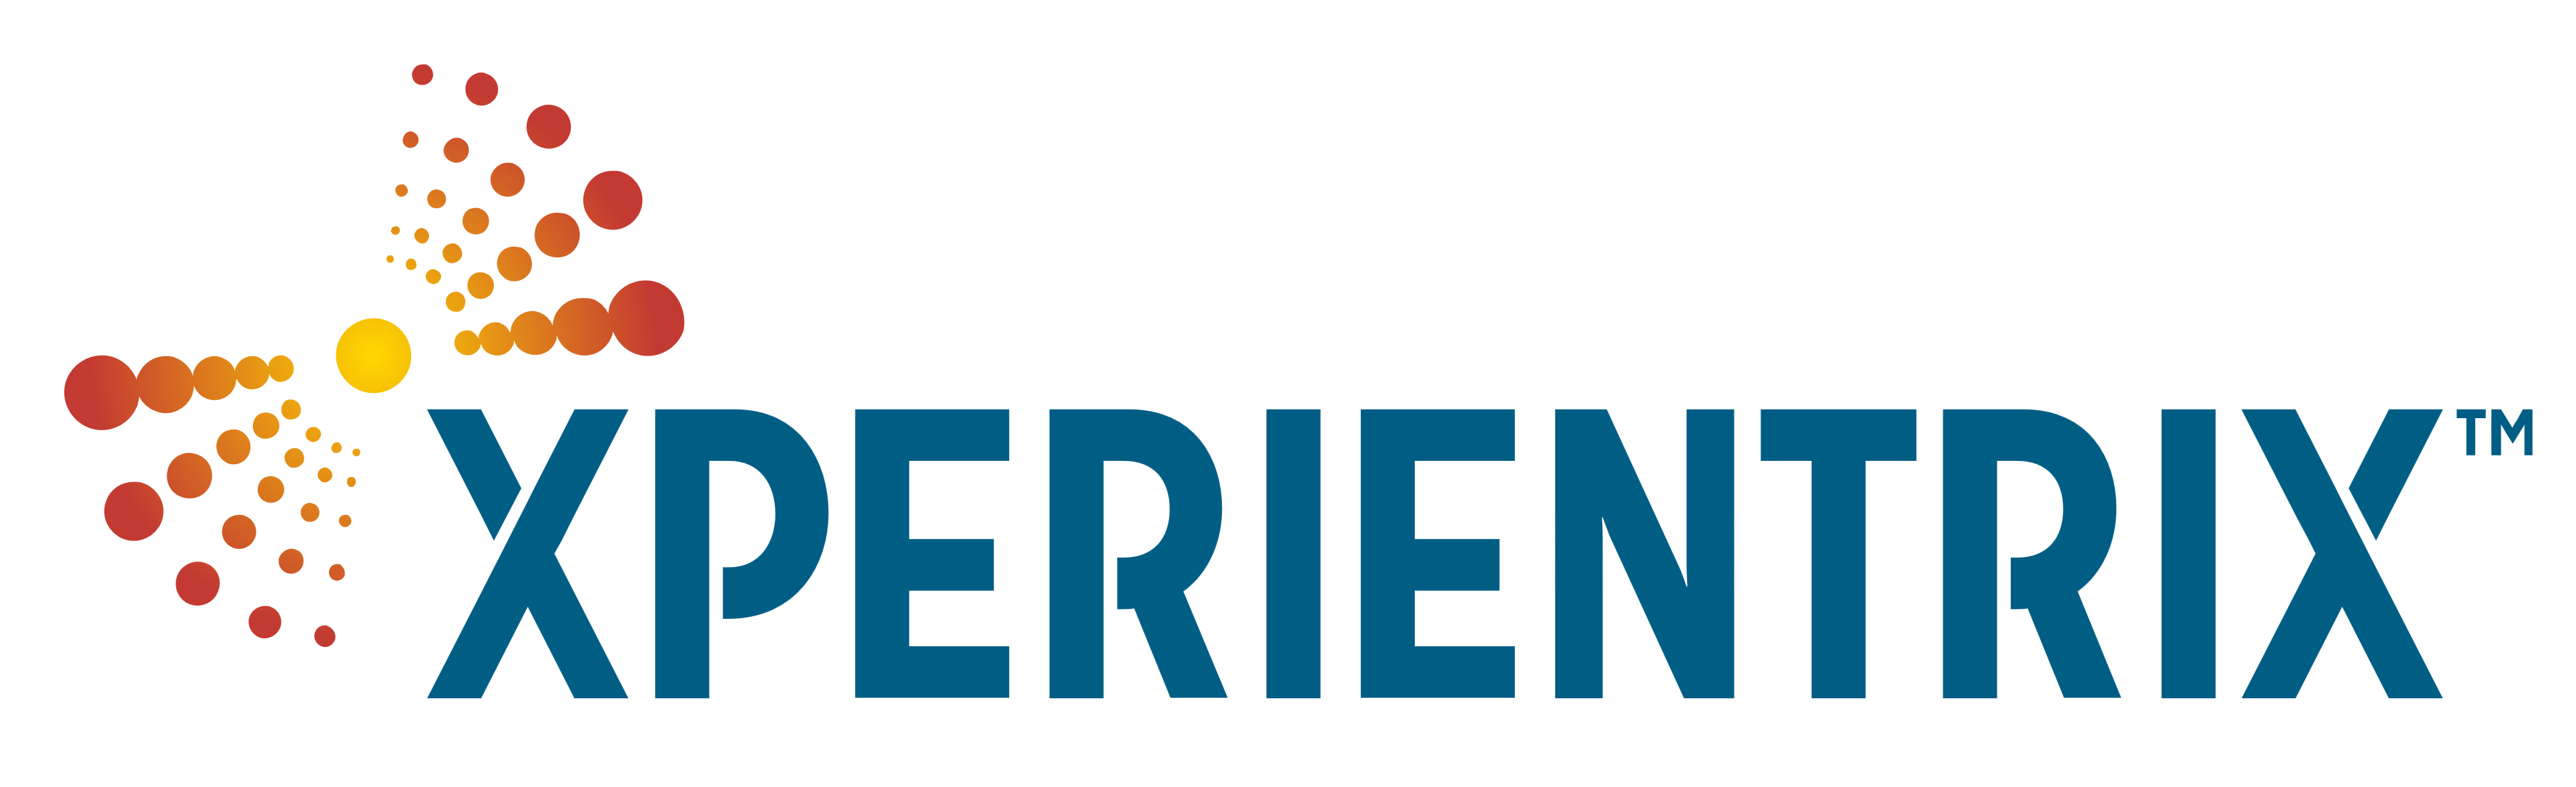 Xperientrix logo, logotype